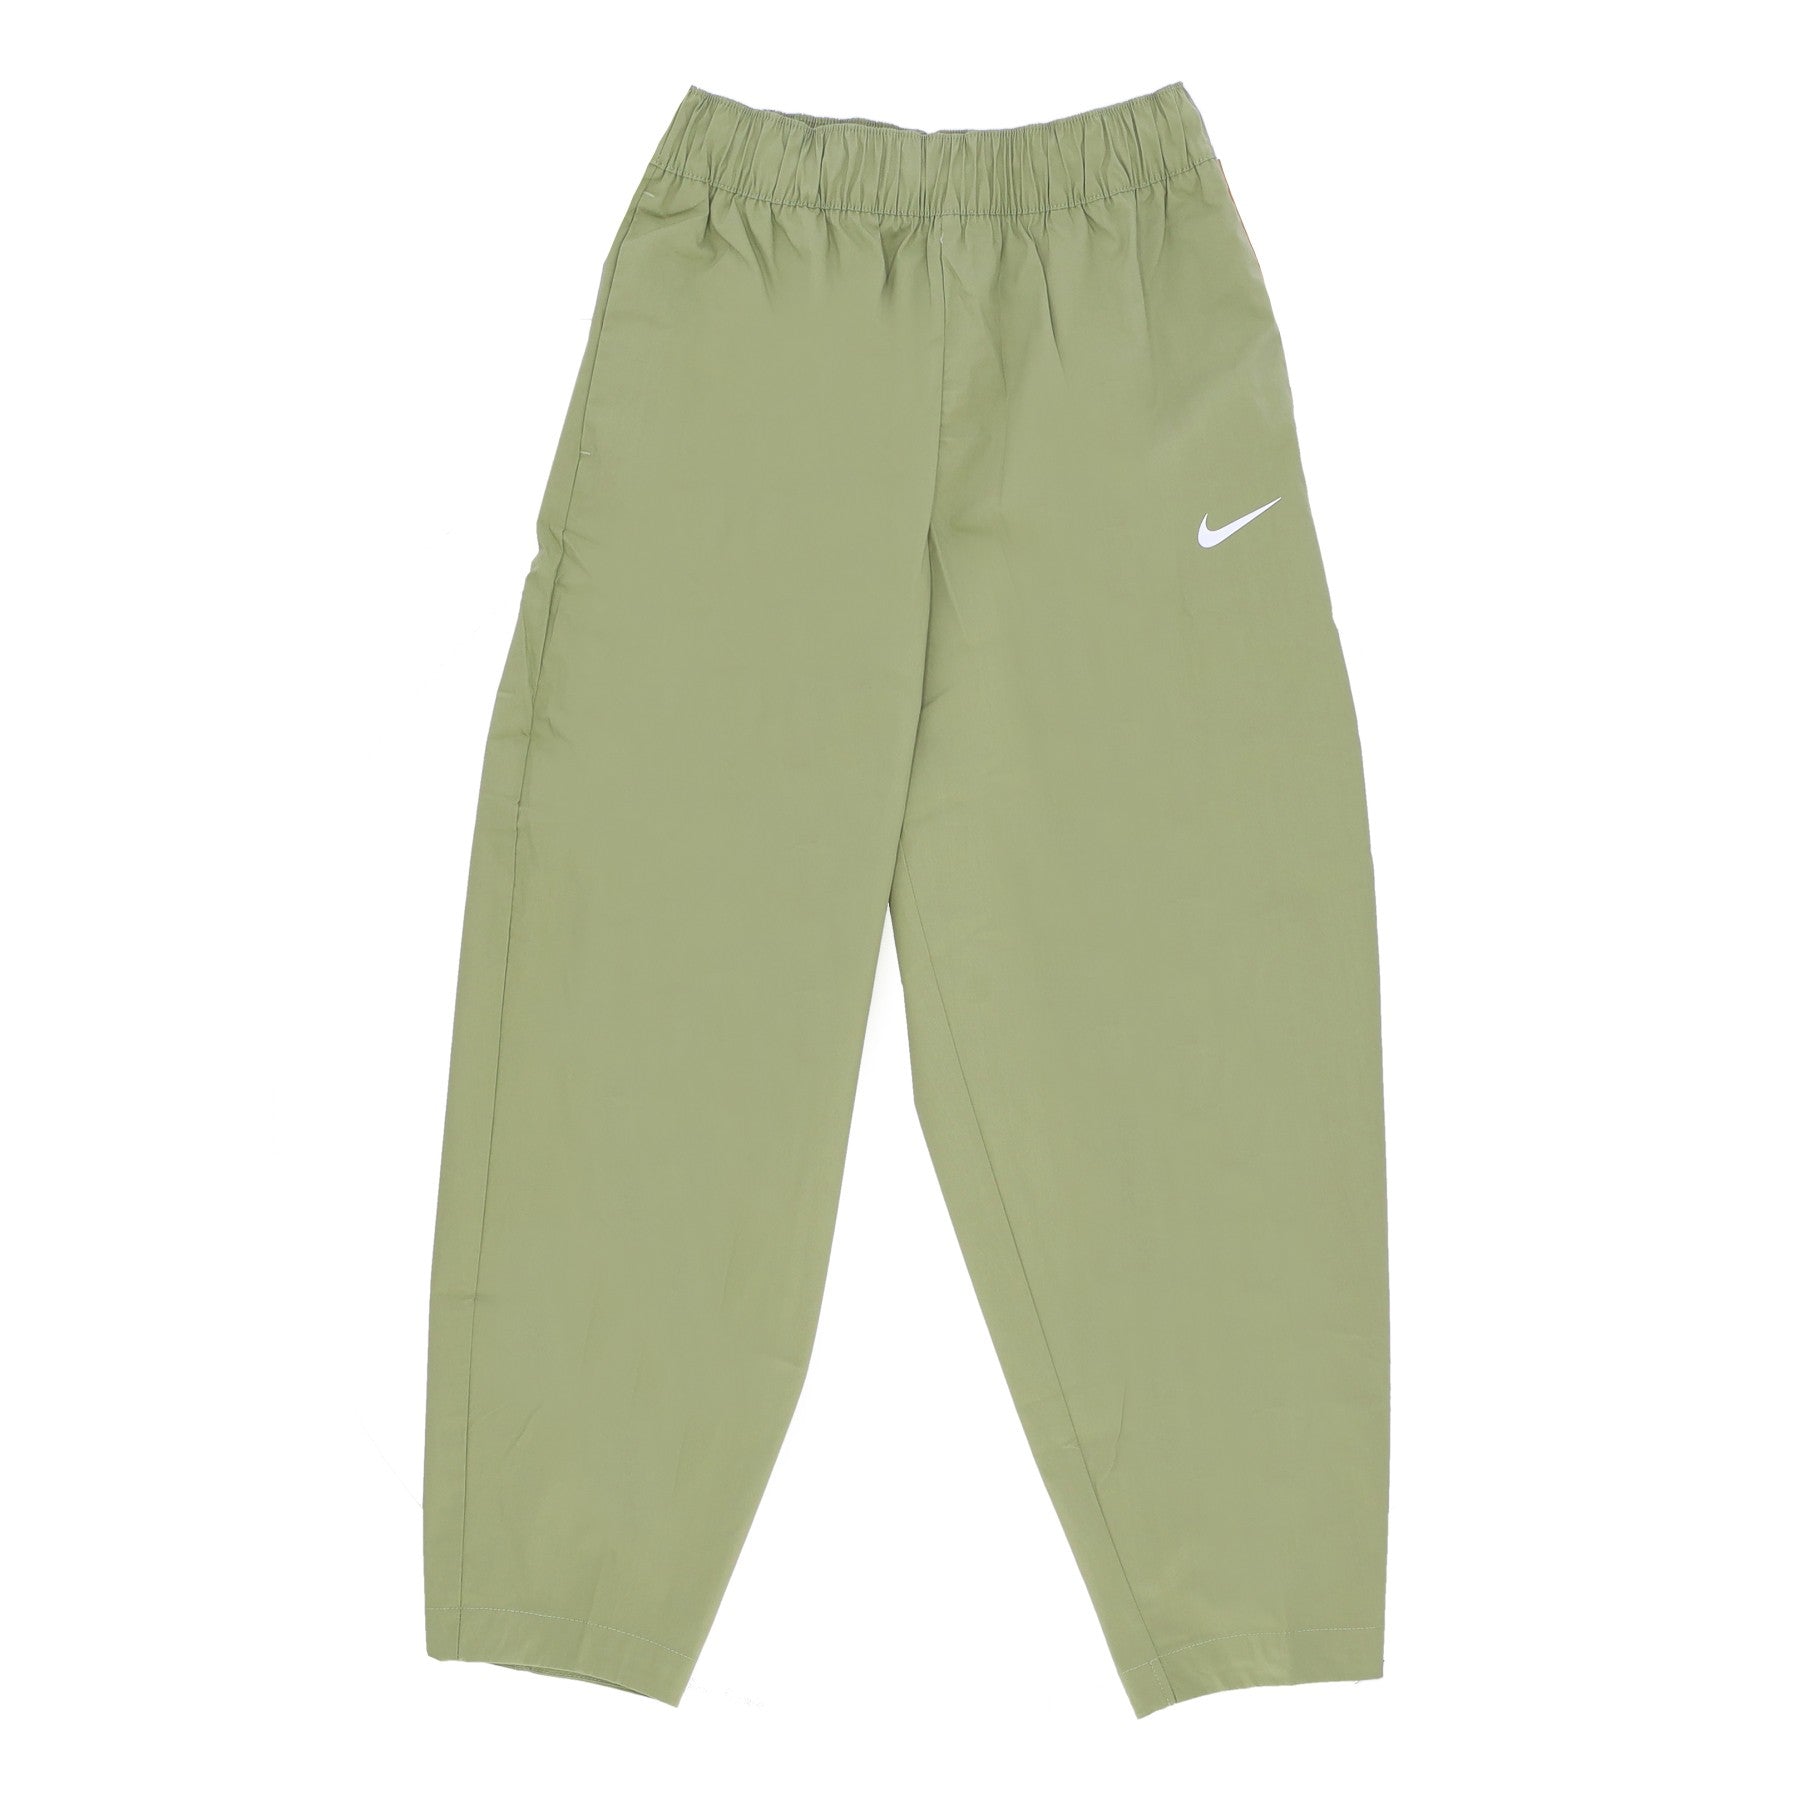 Nike, Pantalone Lungo Donna Essential Woven Hr Pant, Alligator/white